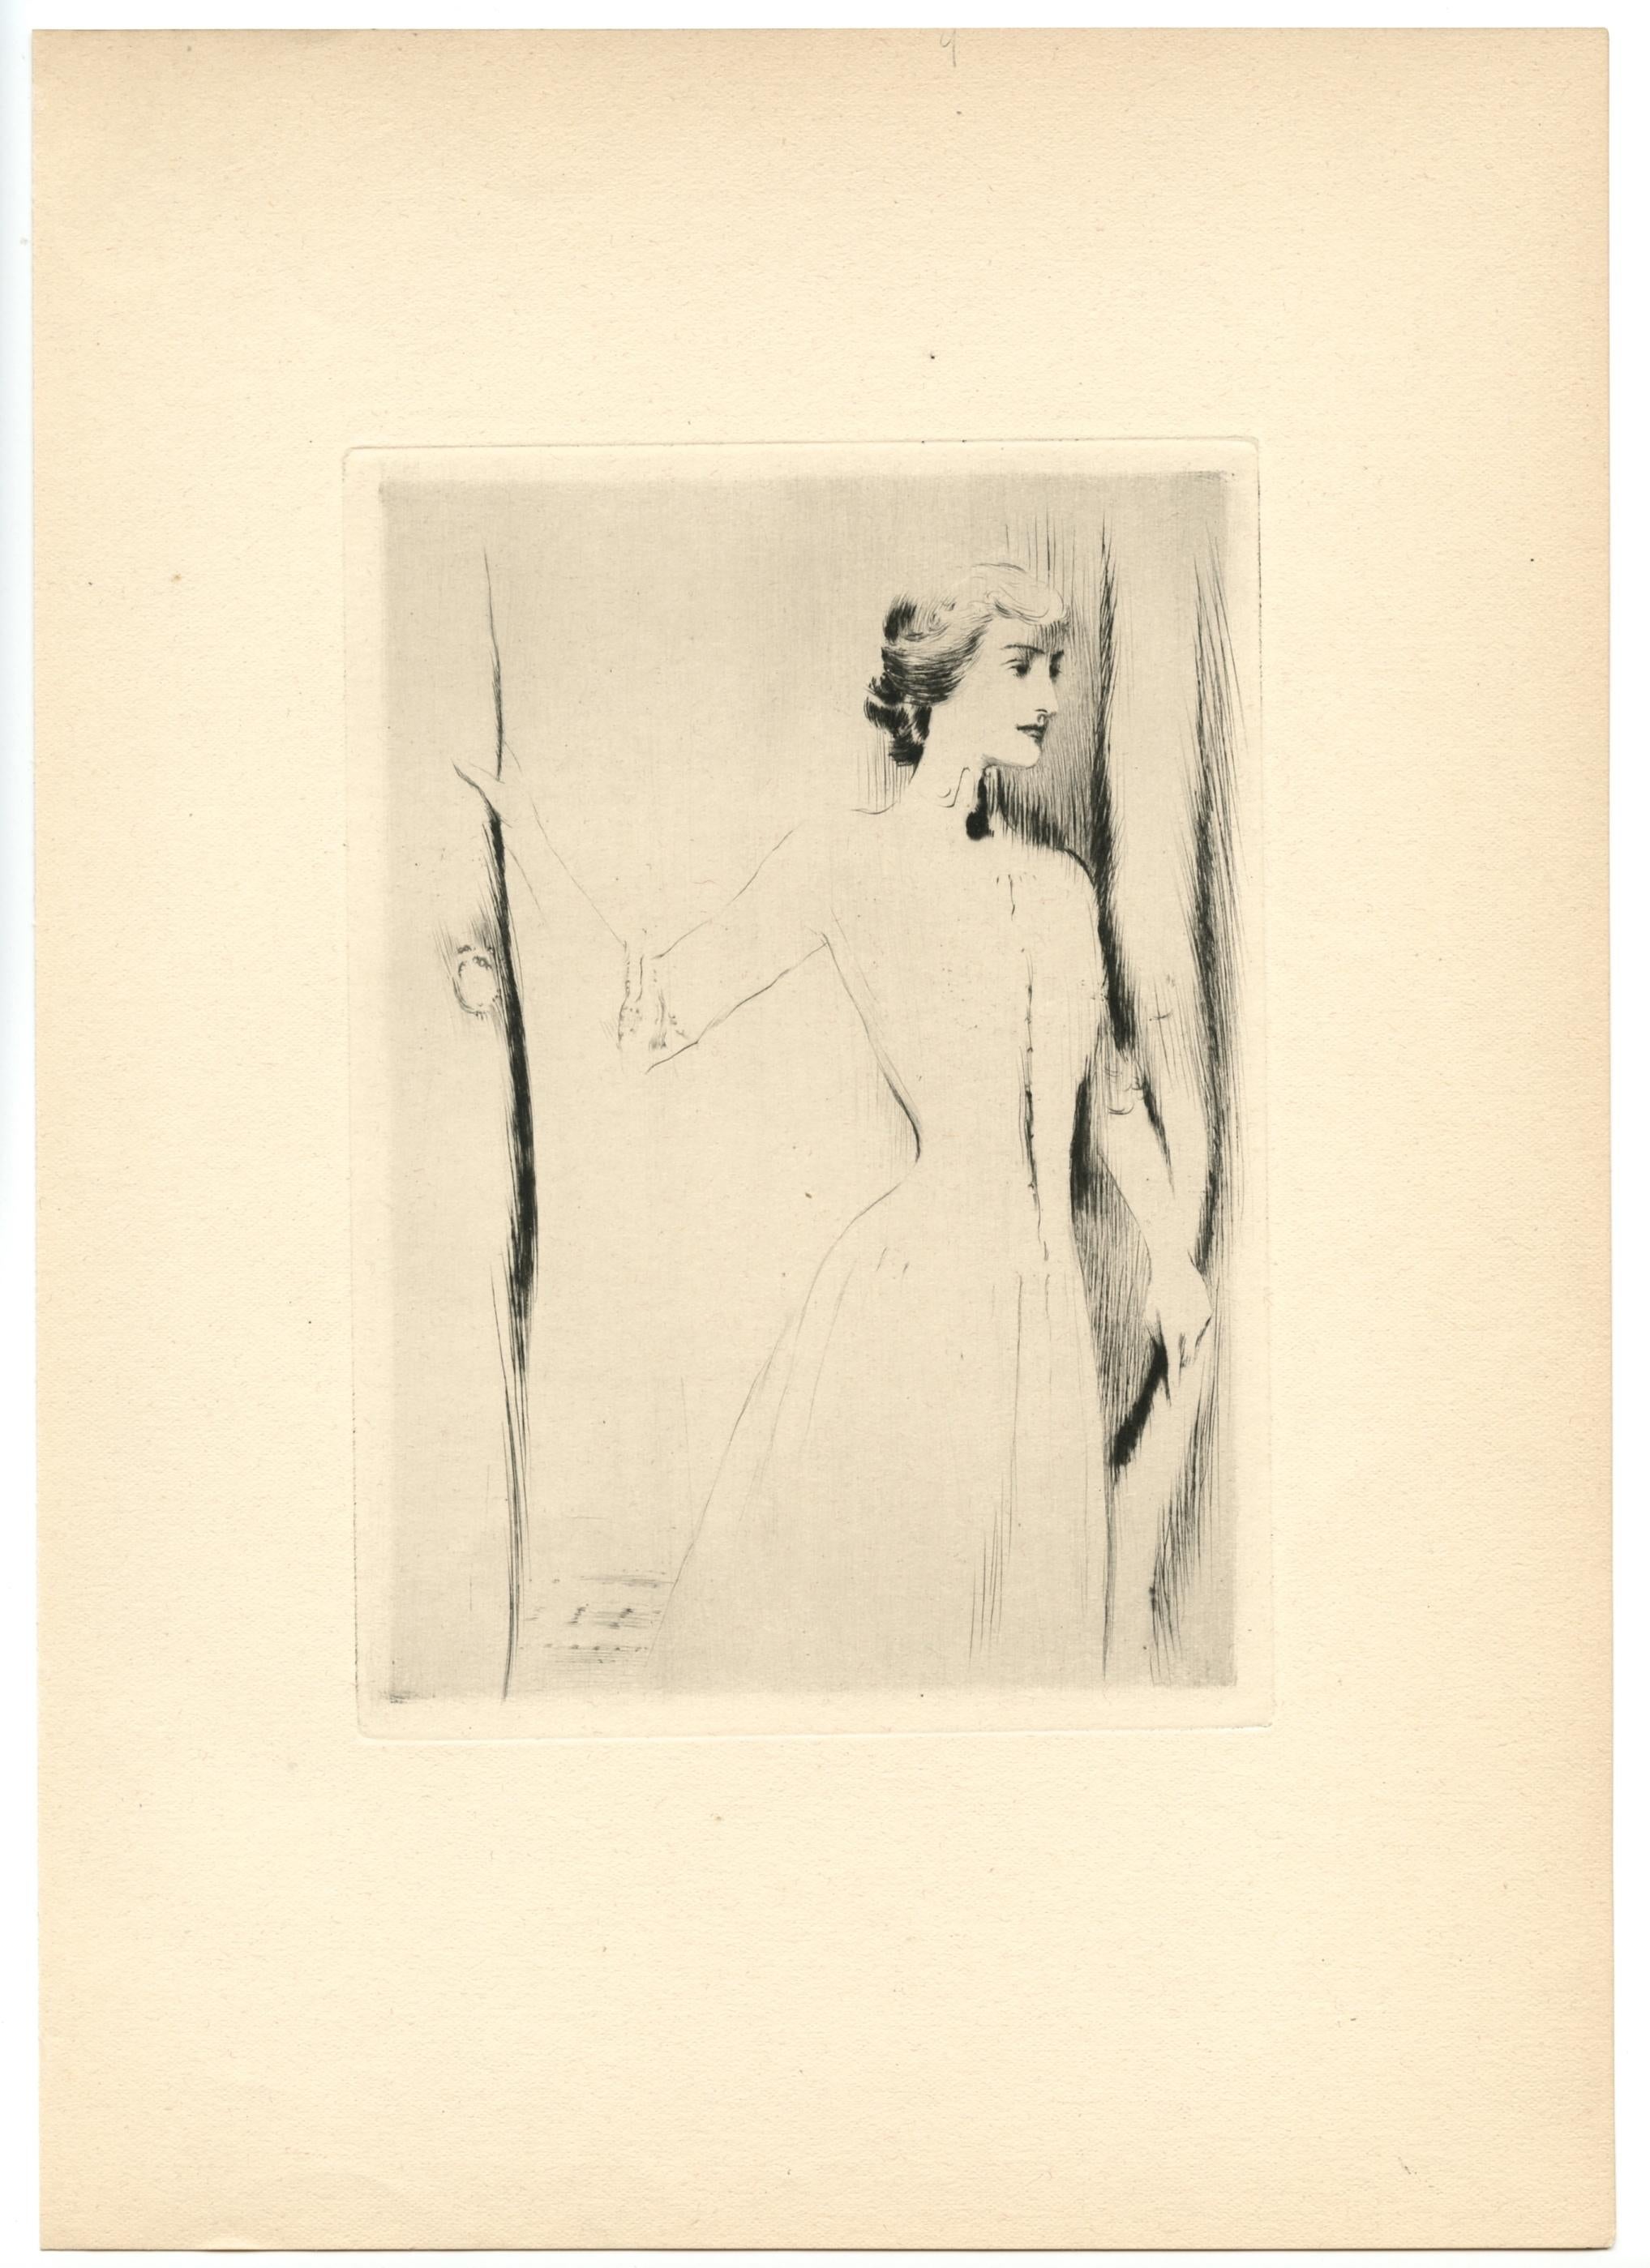 Fernand Khnopff Portrait Print - "Un rideau" original drypoint